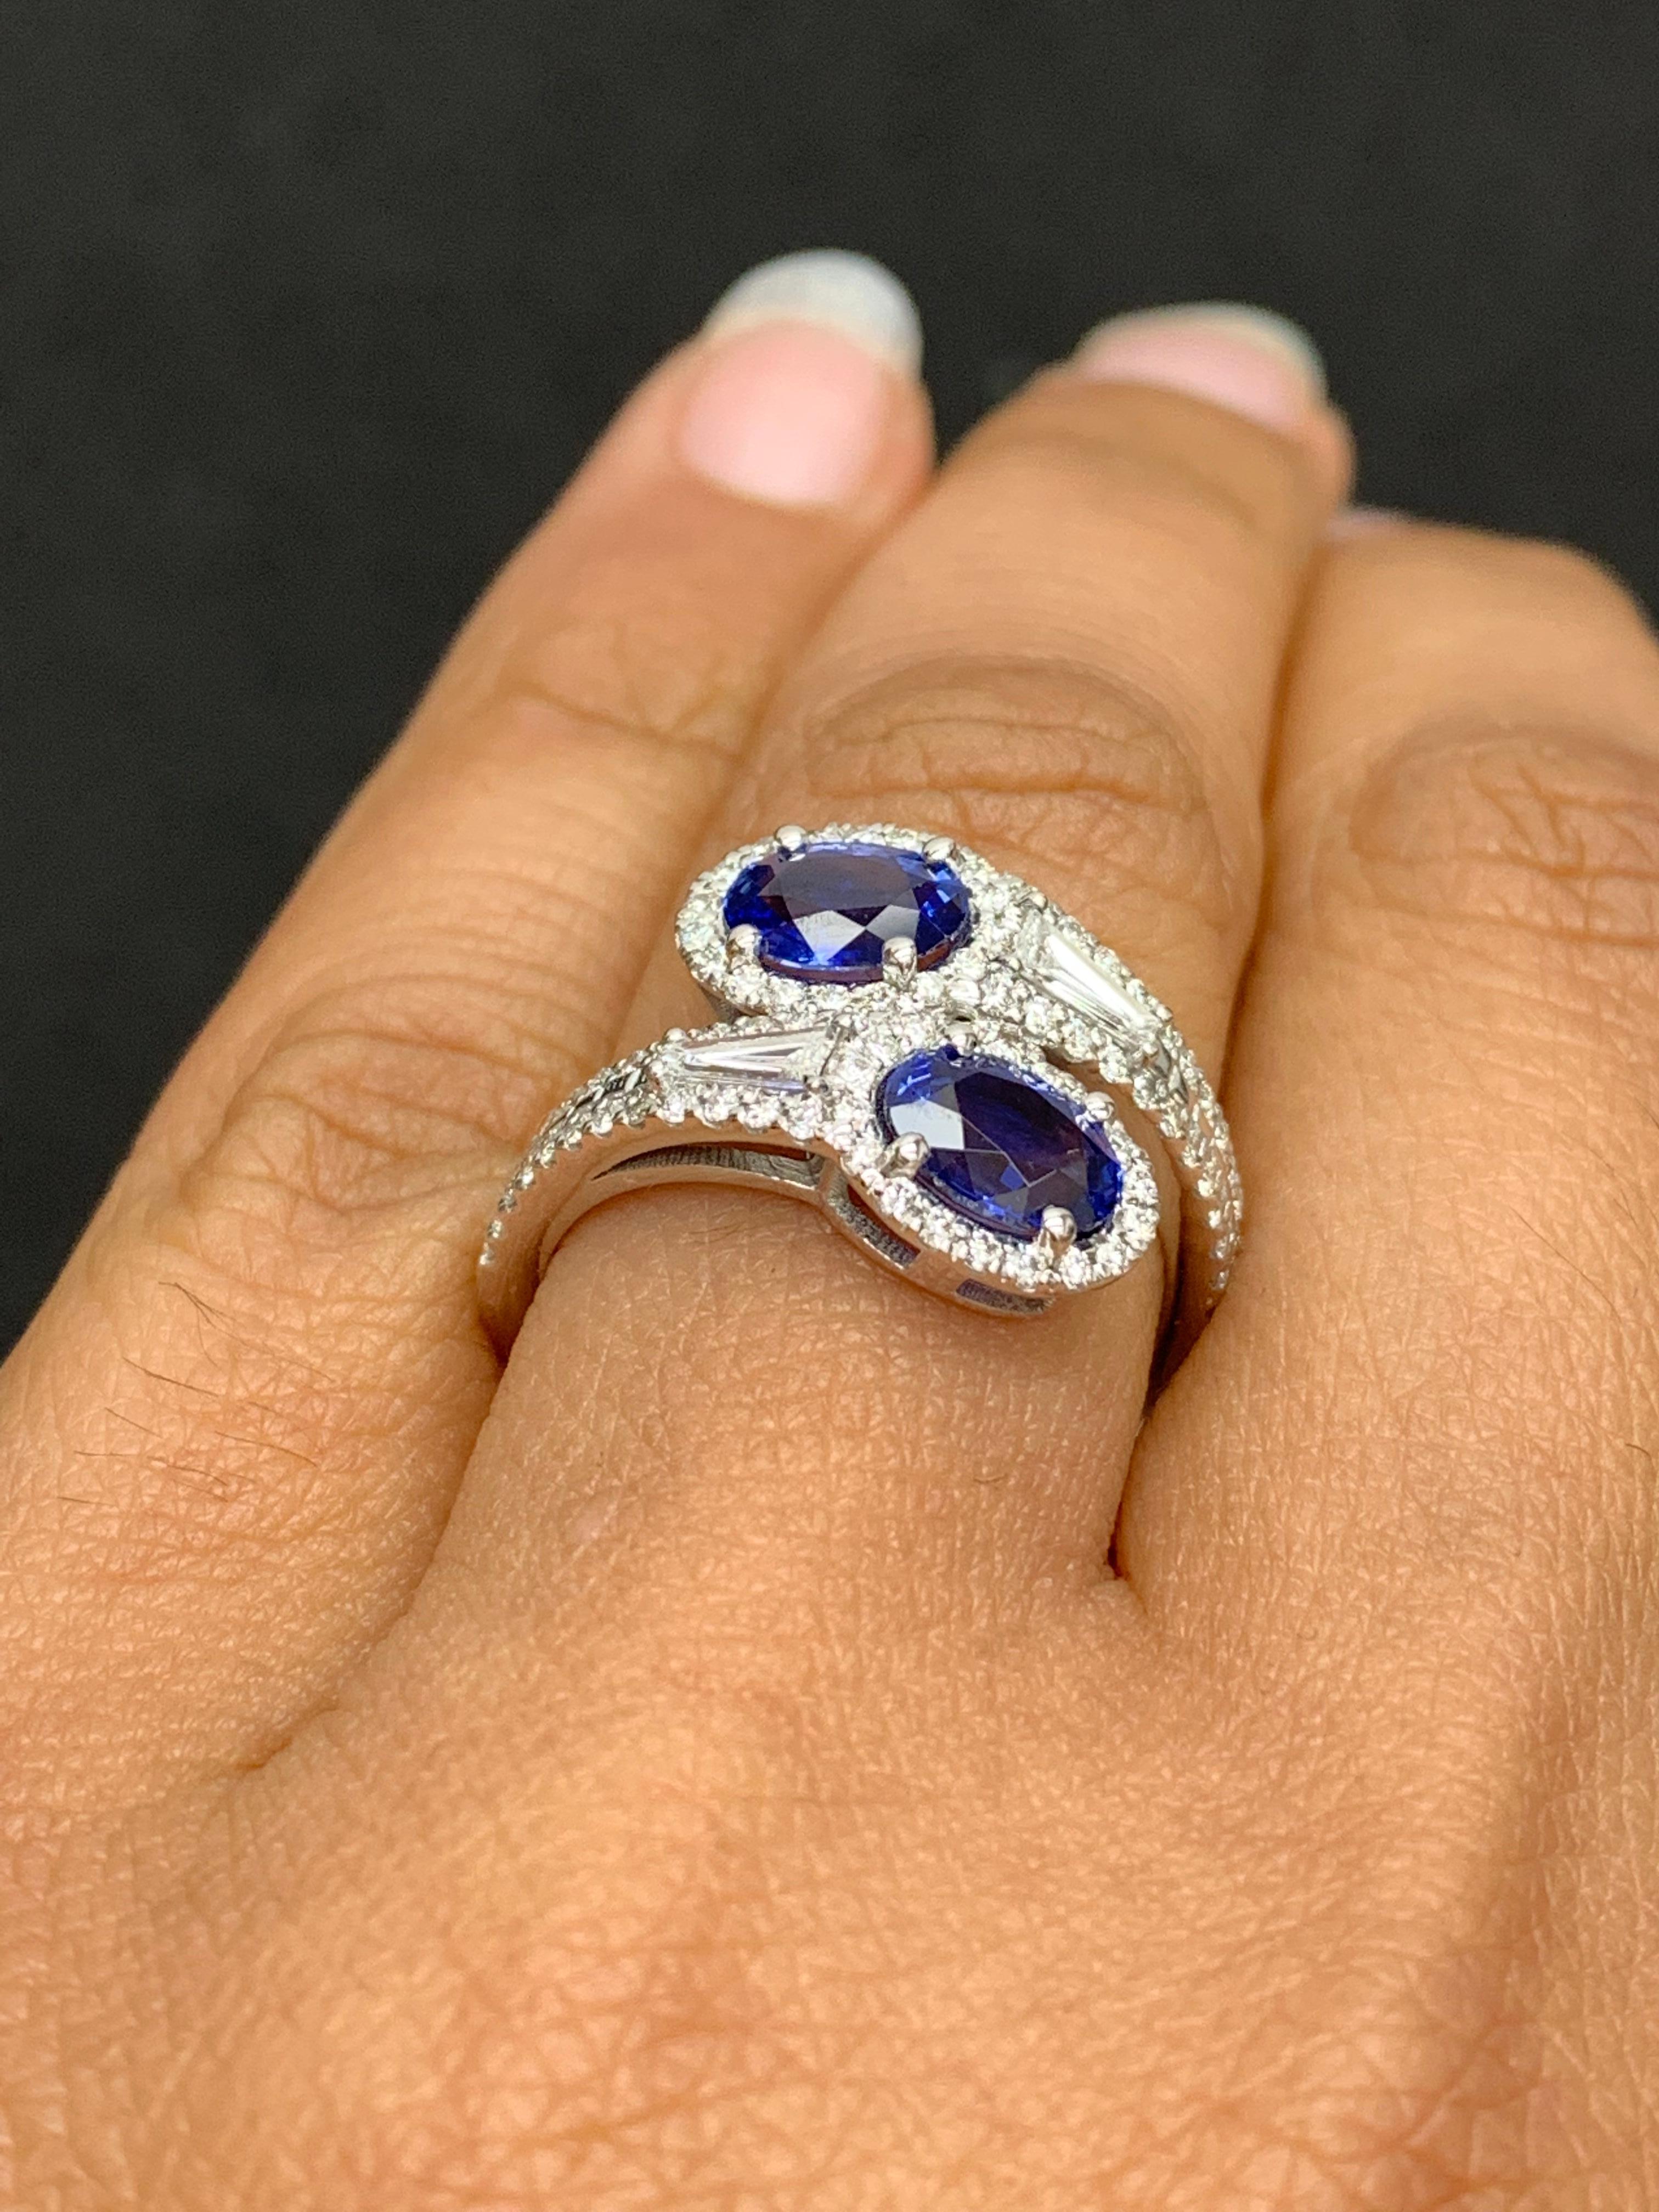 1.81 Carat Oval Cut Sapphire Diamond Toi Et Moi Engagement Ring 14K White Gold For Sale 2